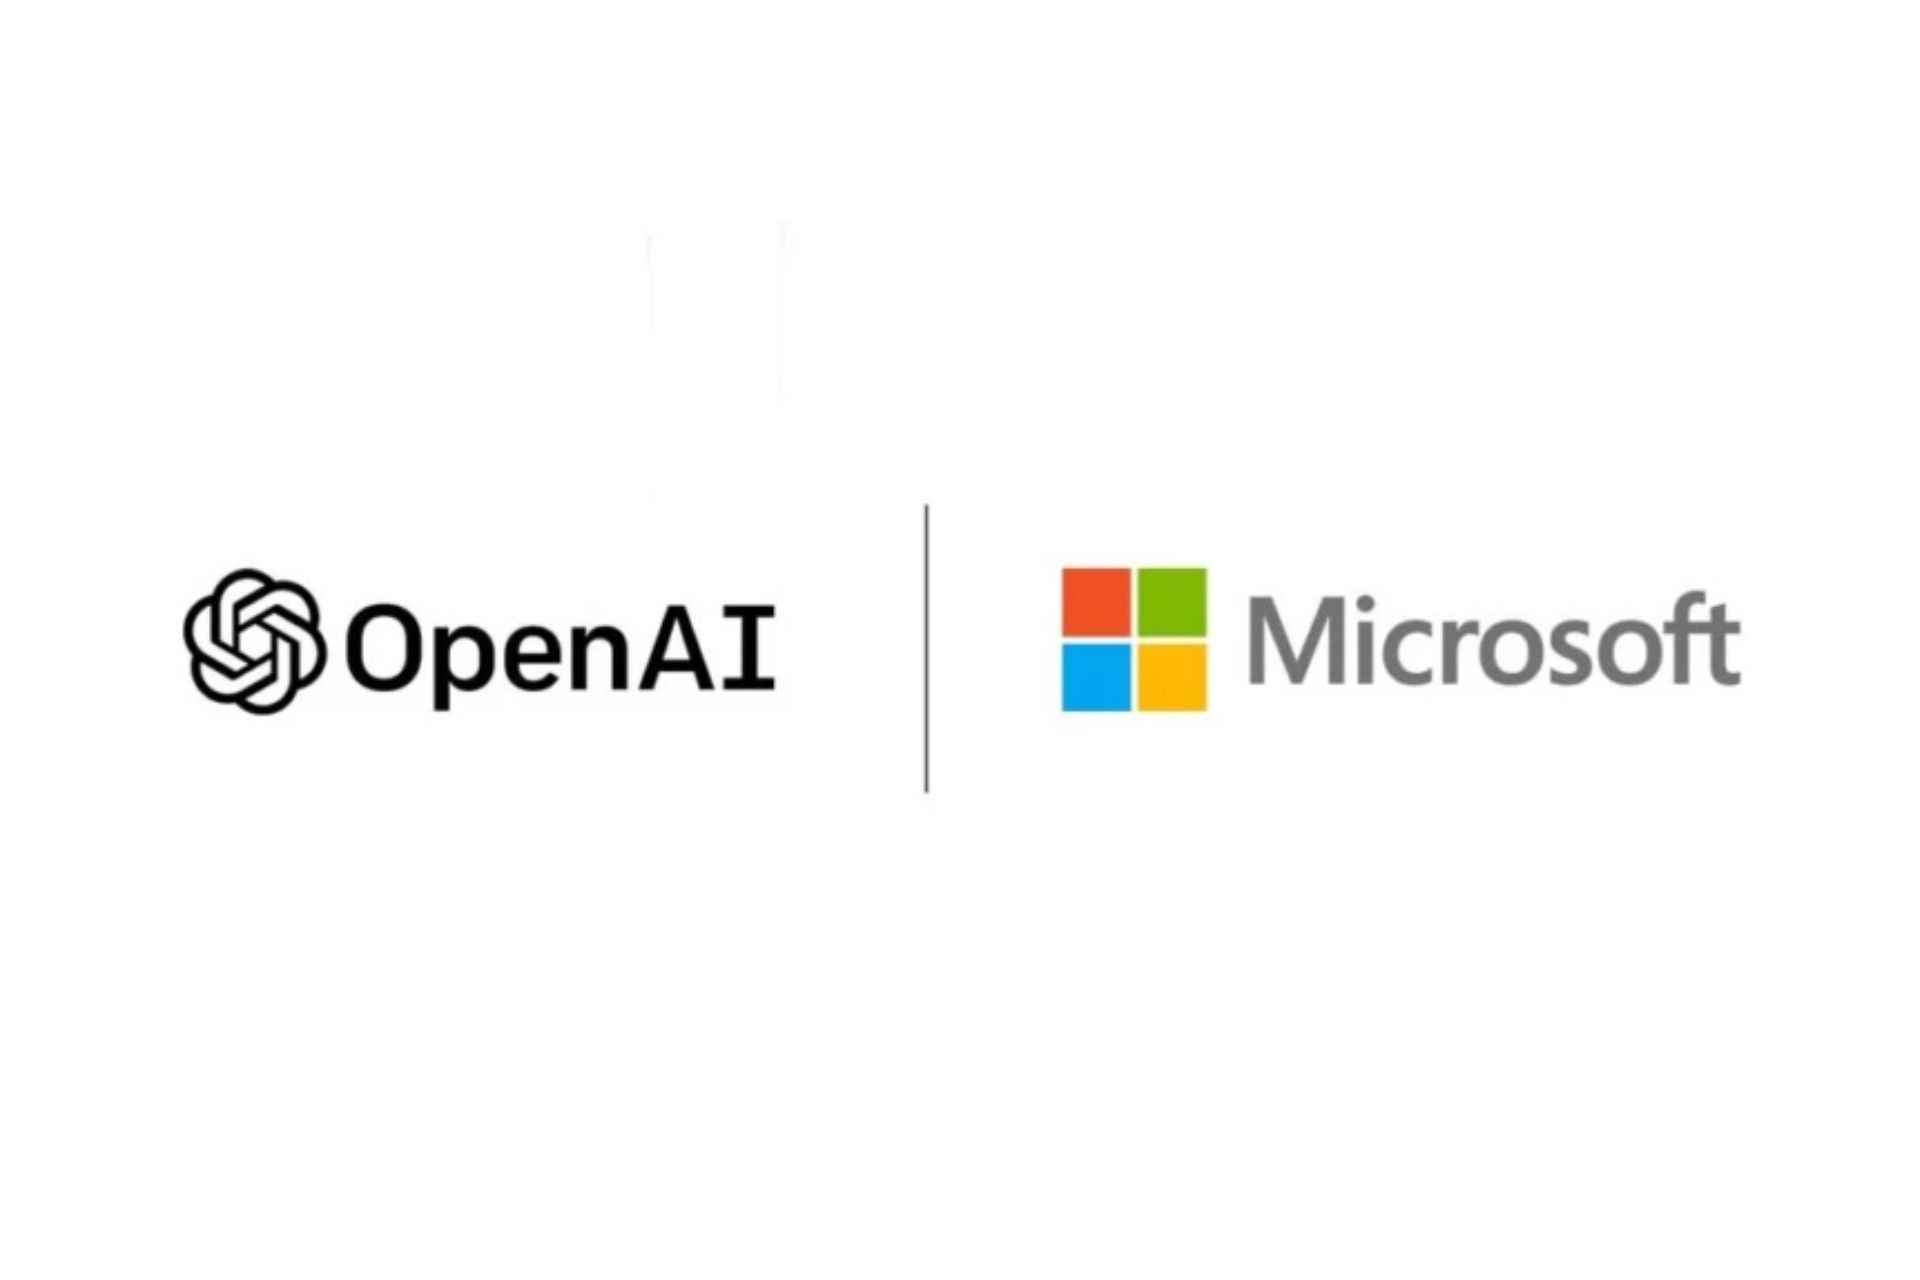 Azure OpenAI Service